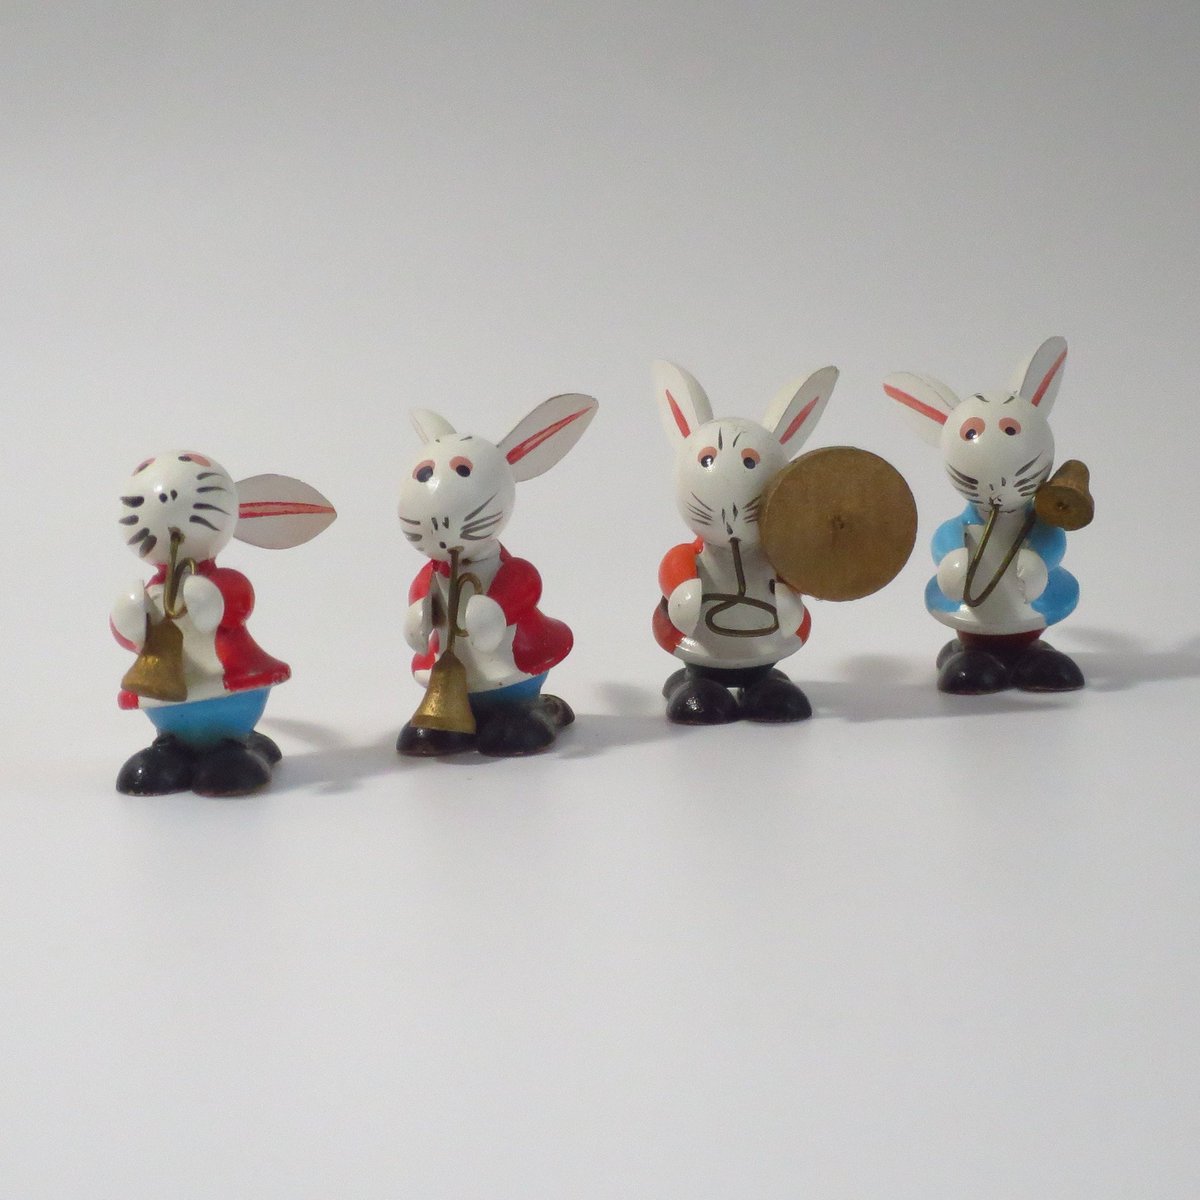 True Vintage Miniature Wood Bunnies, Kitsch Musician Gift, MCM Spring Cottage Decor tuppu.net/f17c0ca9 #SwirlingOrange11 #VintageFun #Etsyteamunity #SMILEtt23